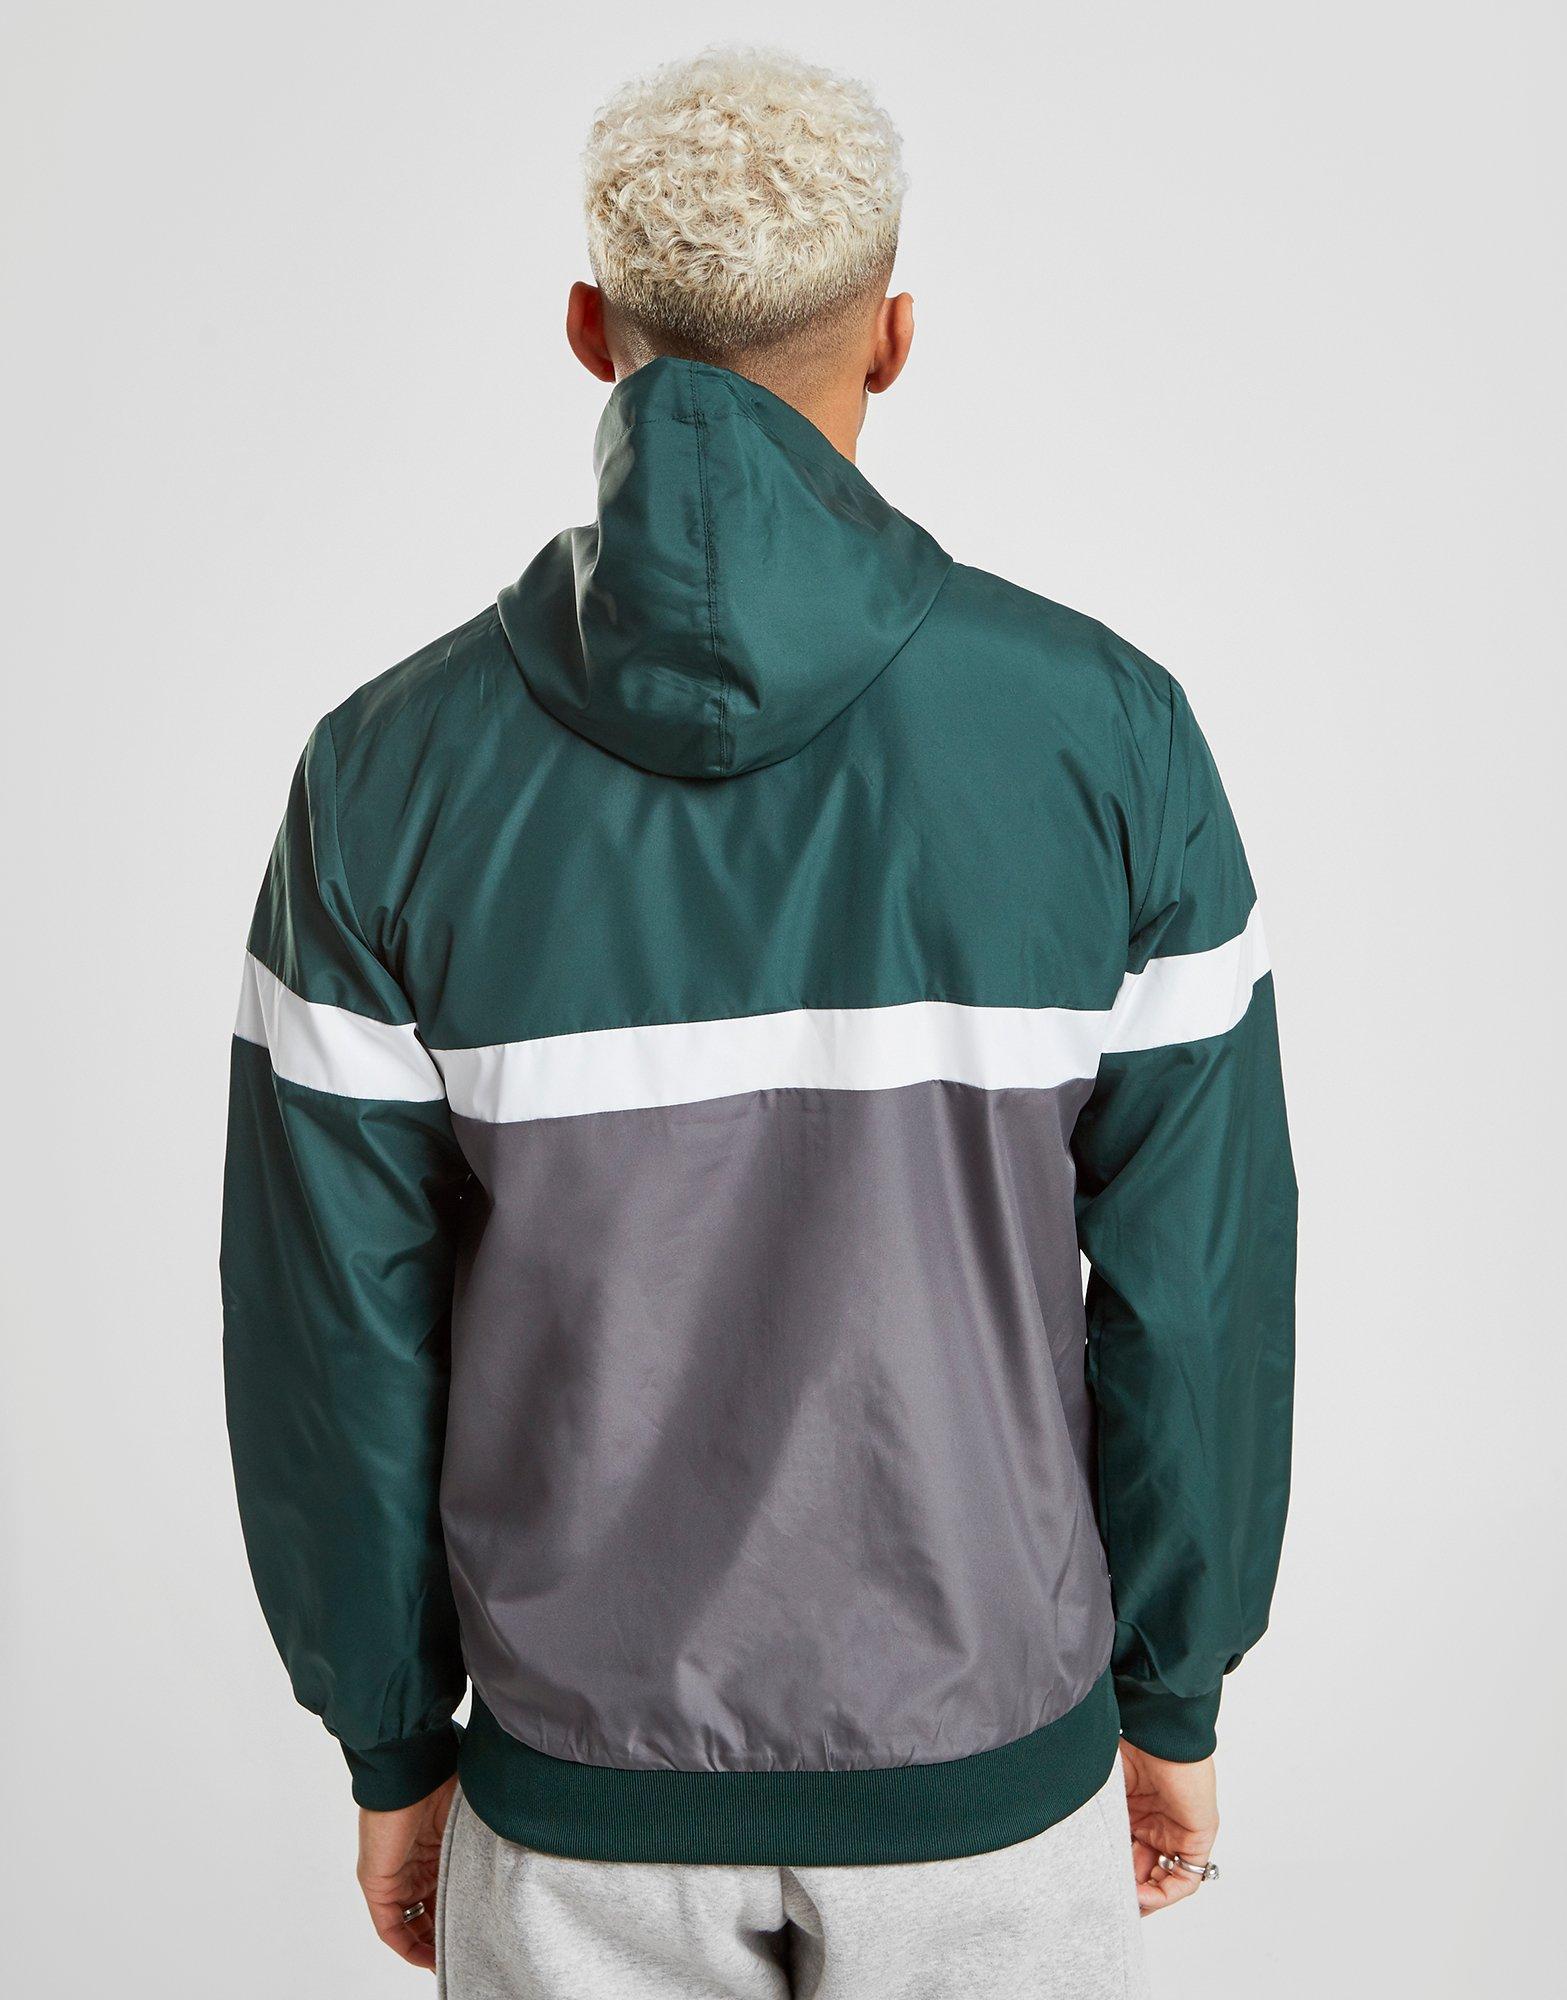 adidas green reversible jacket